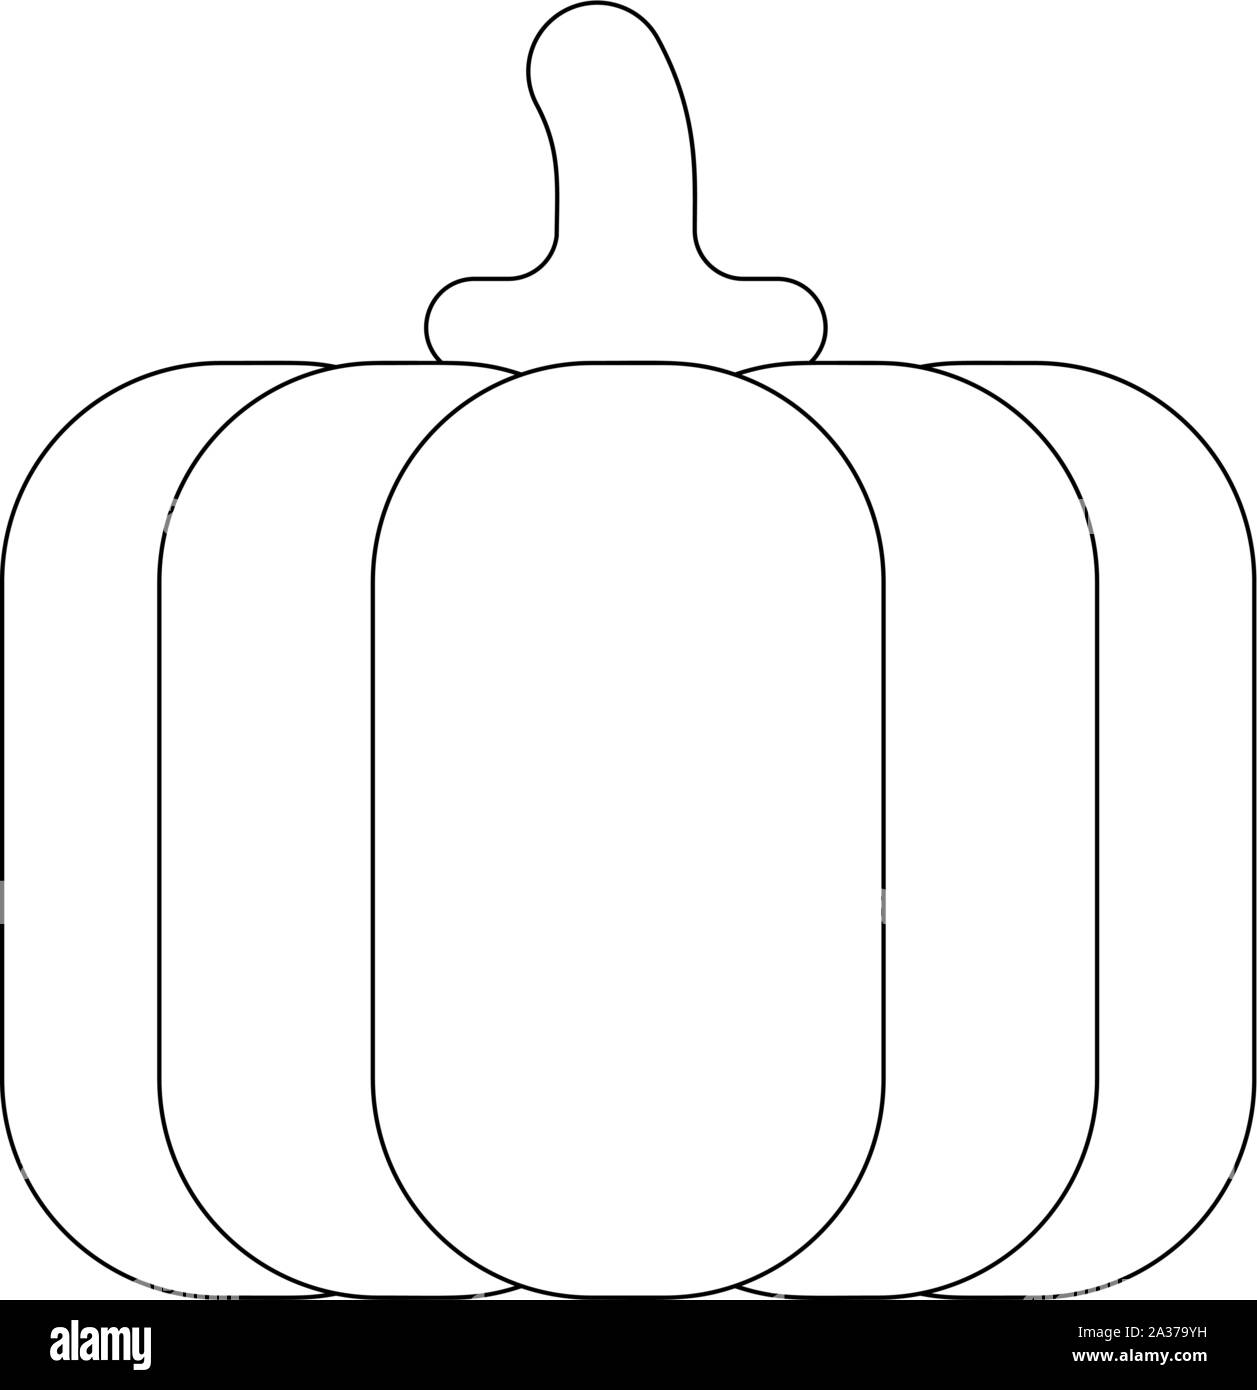 Pumpkin Cartoon Vegetable Coloring Illustration Stock Vector